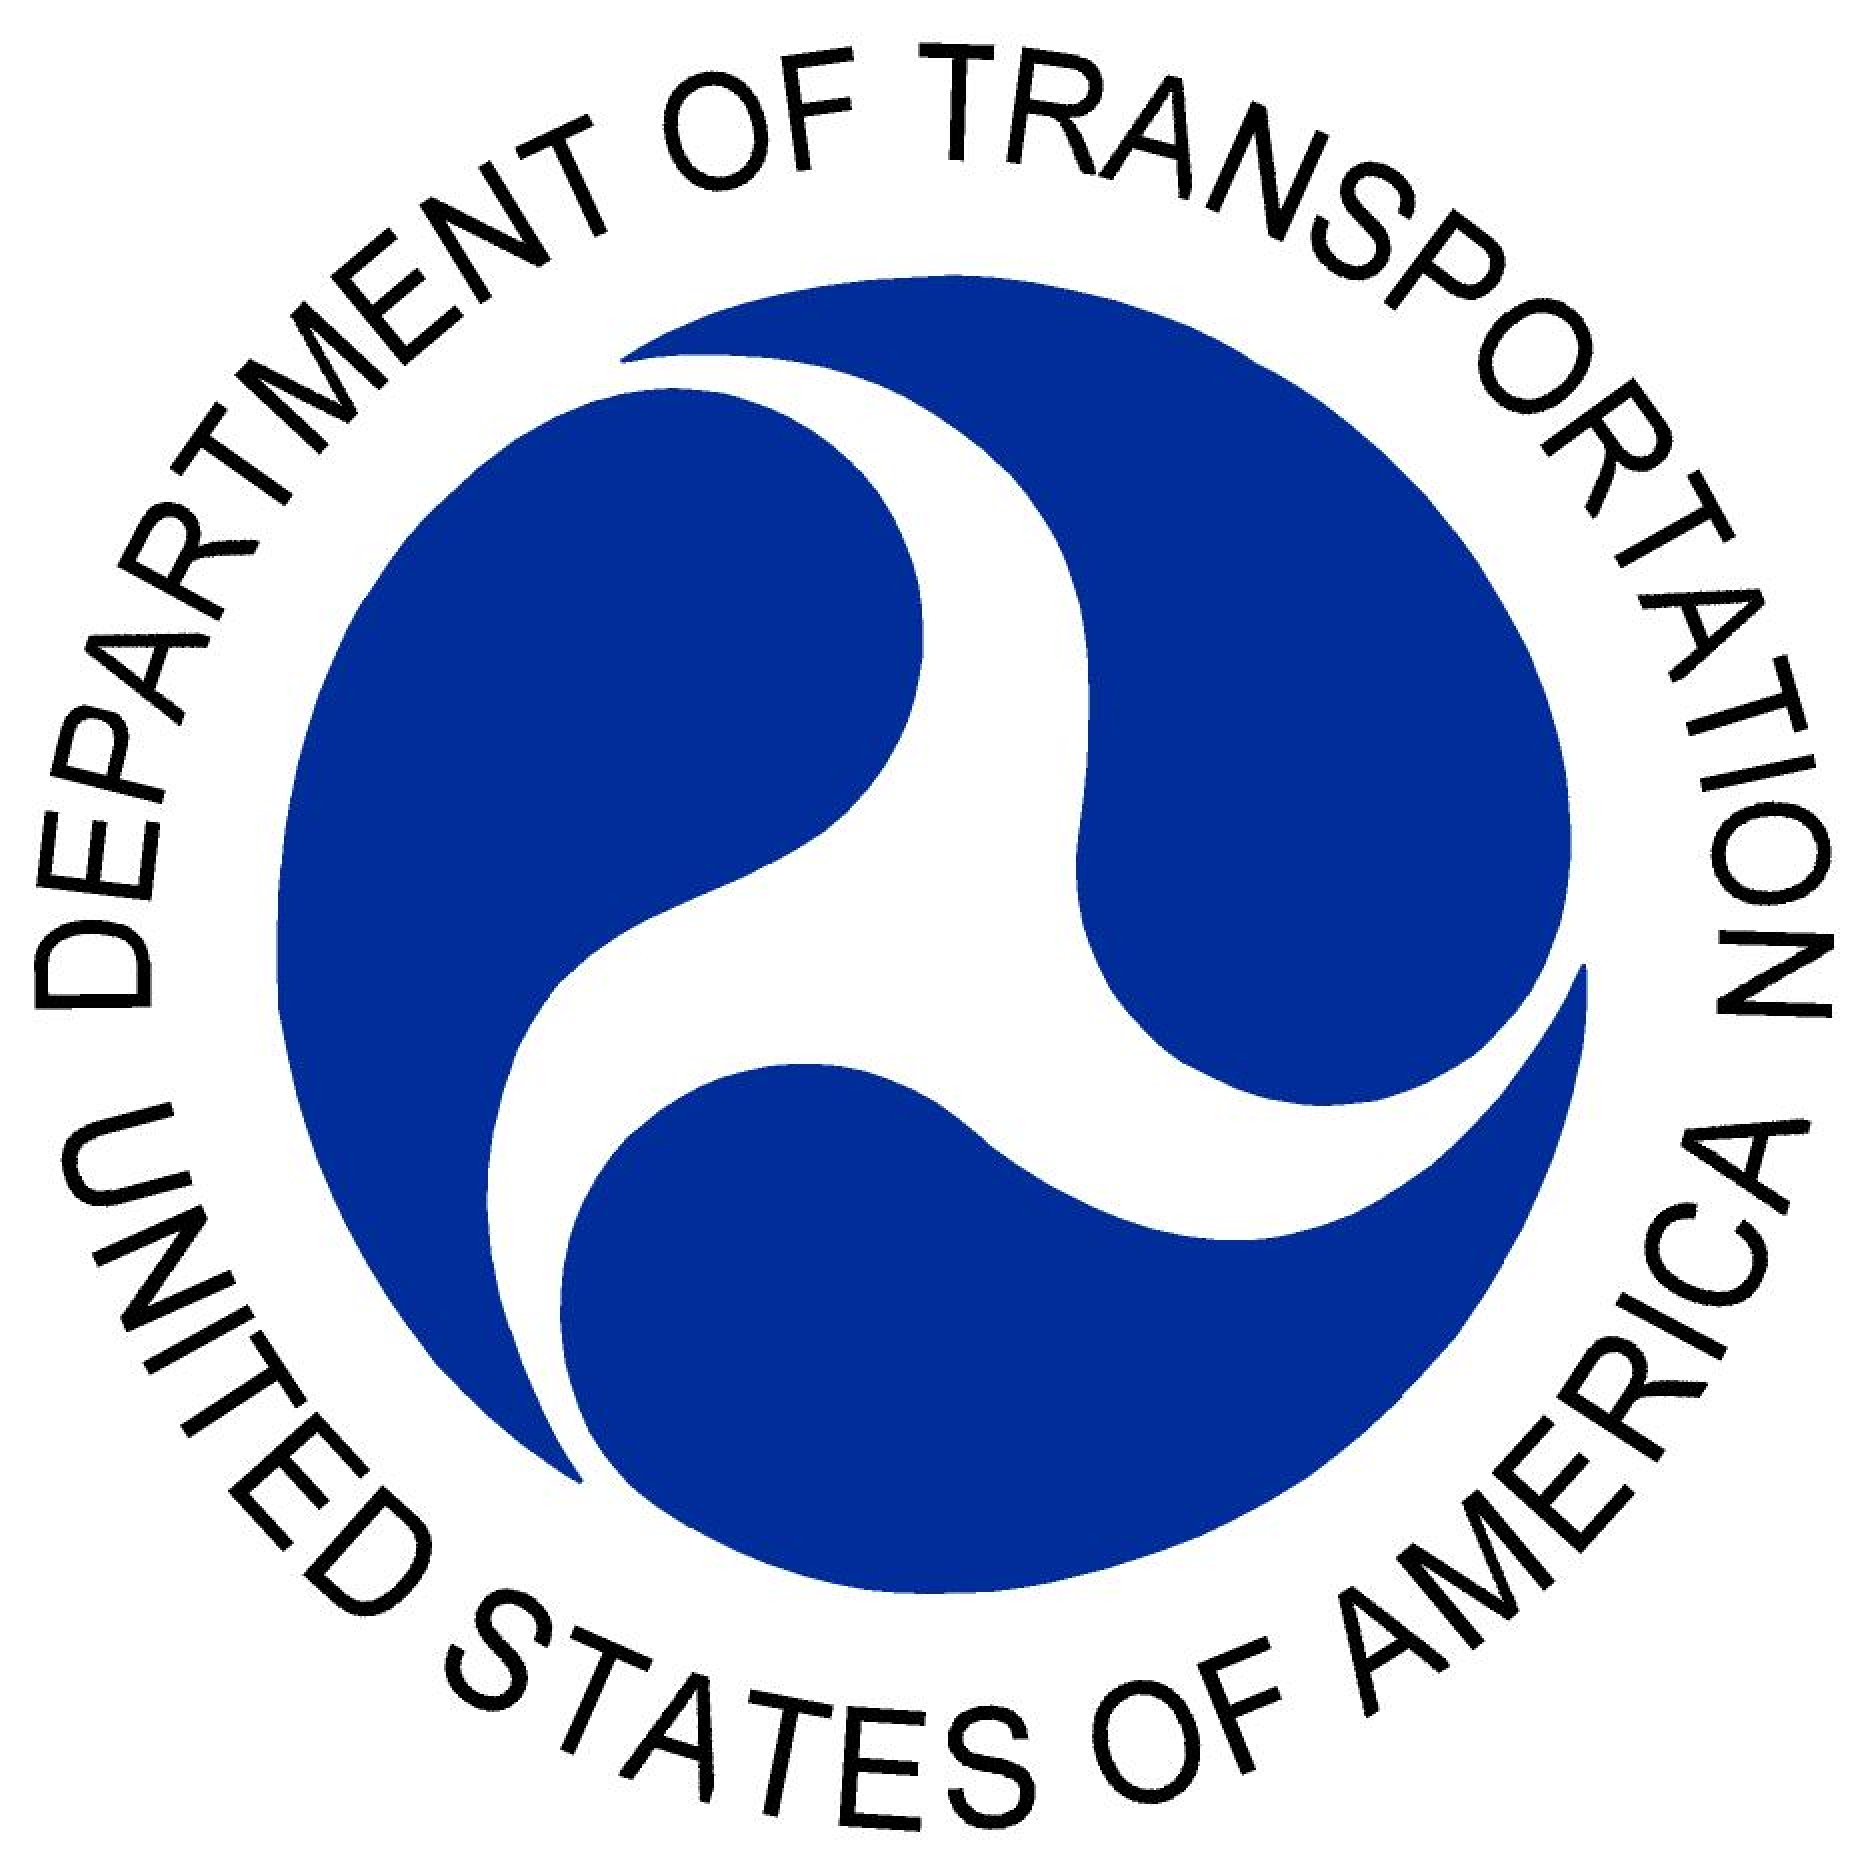 U.S. Department of Transportation